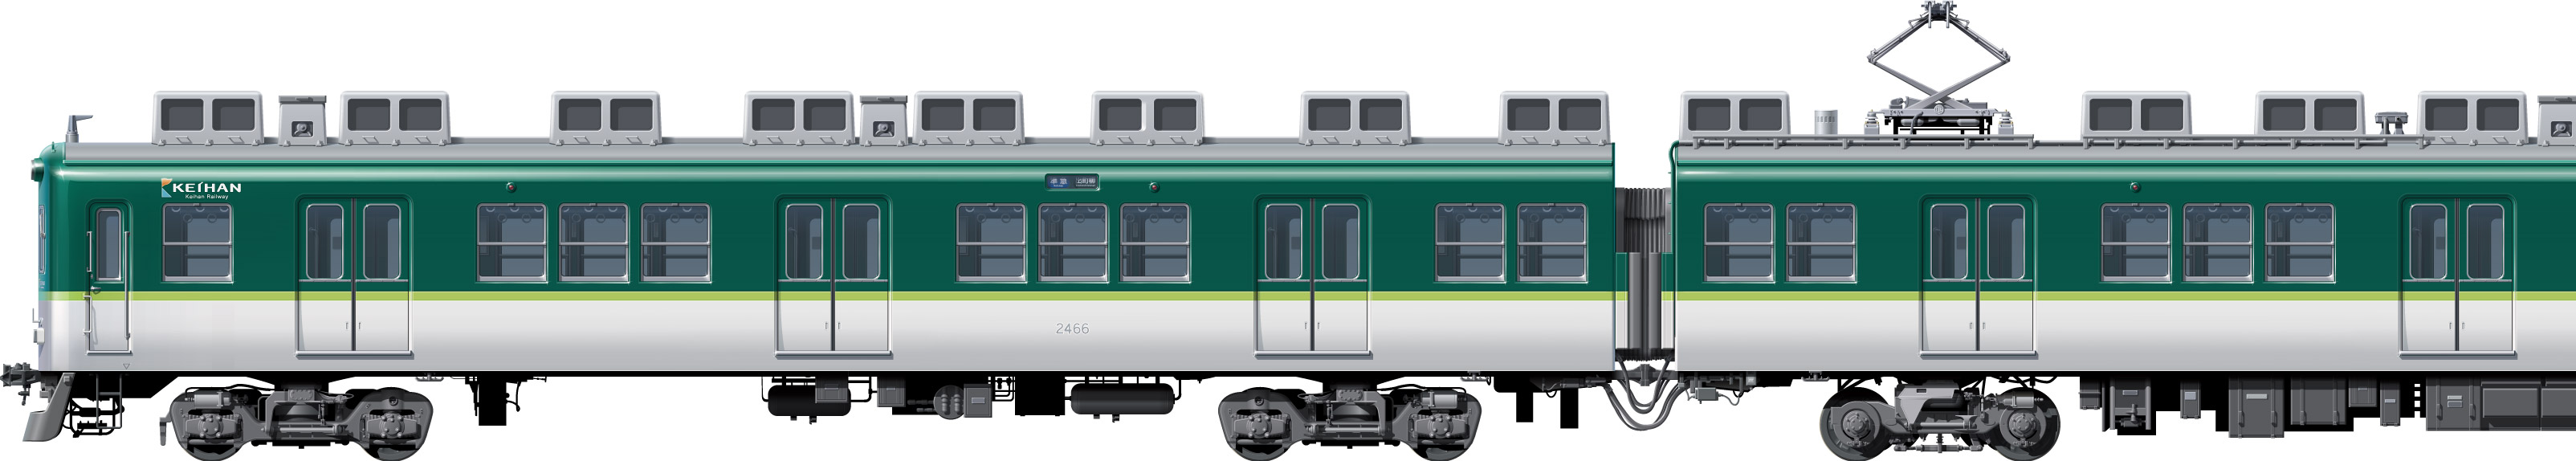 2400n@ʃCXg@ʃCXg@tgr[CXg@TChr[CXg@CXg@dS keihan Railway illustration  front view@sideview front view 